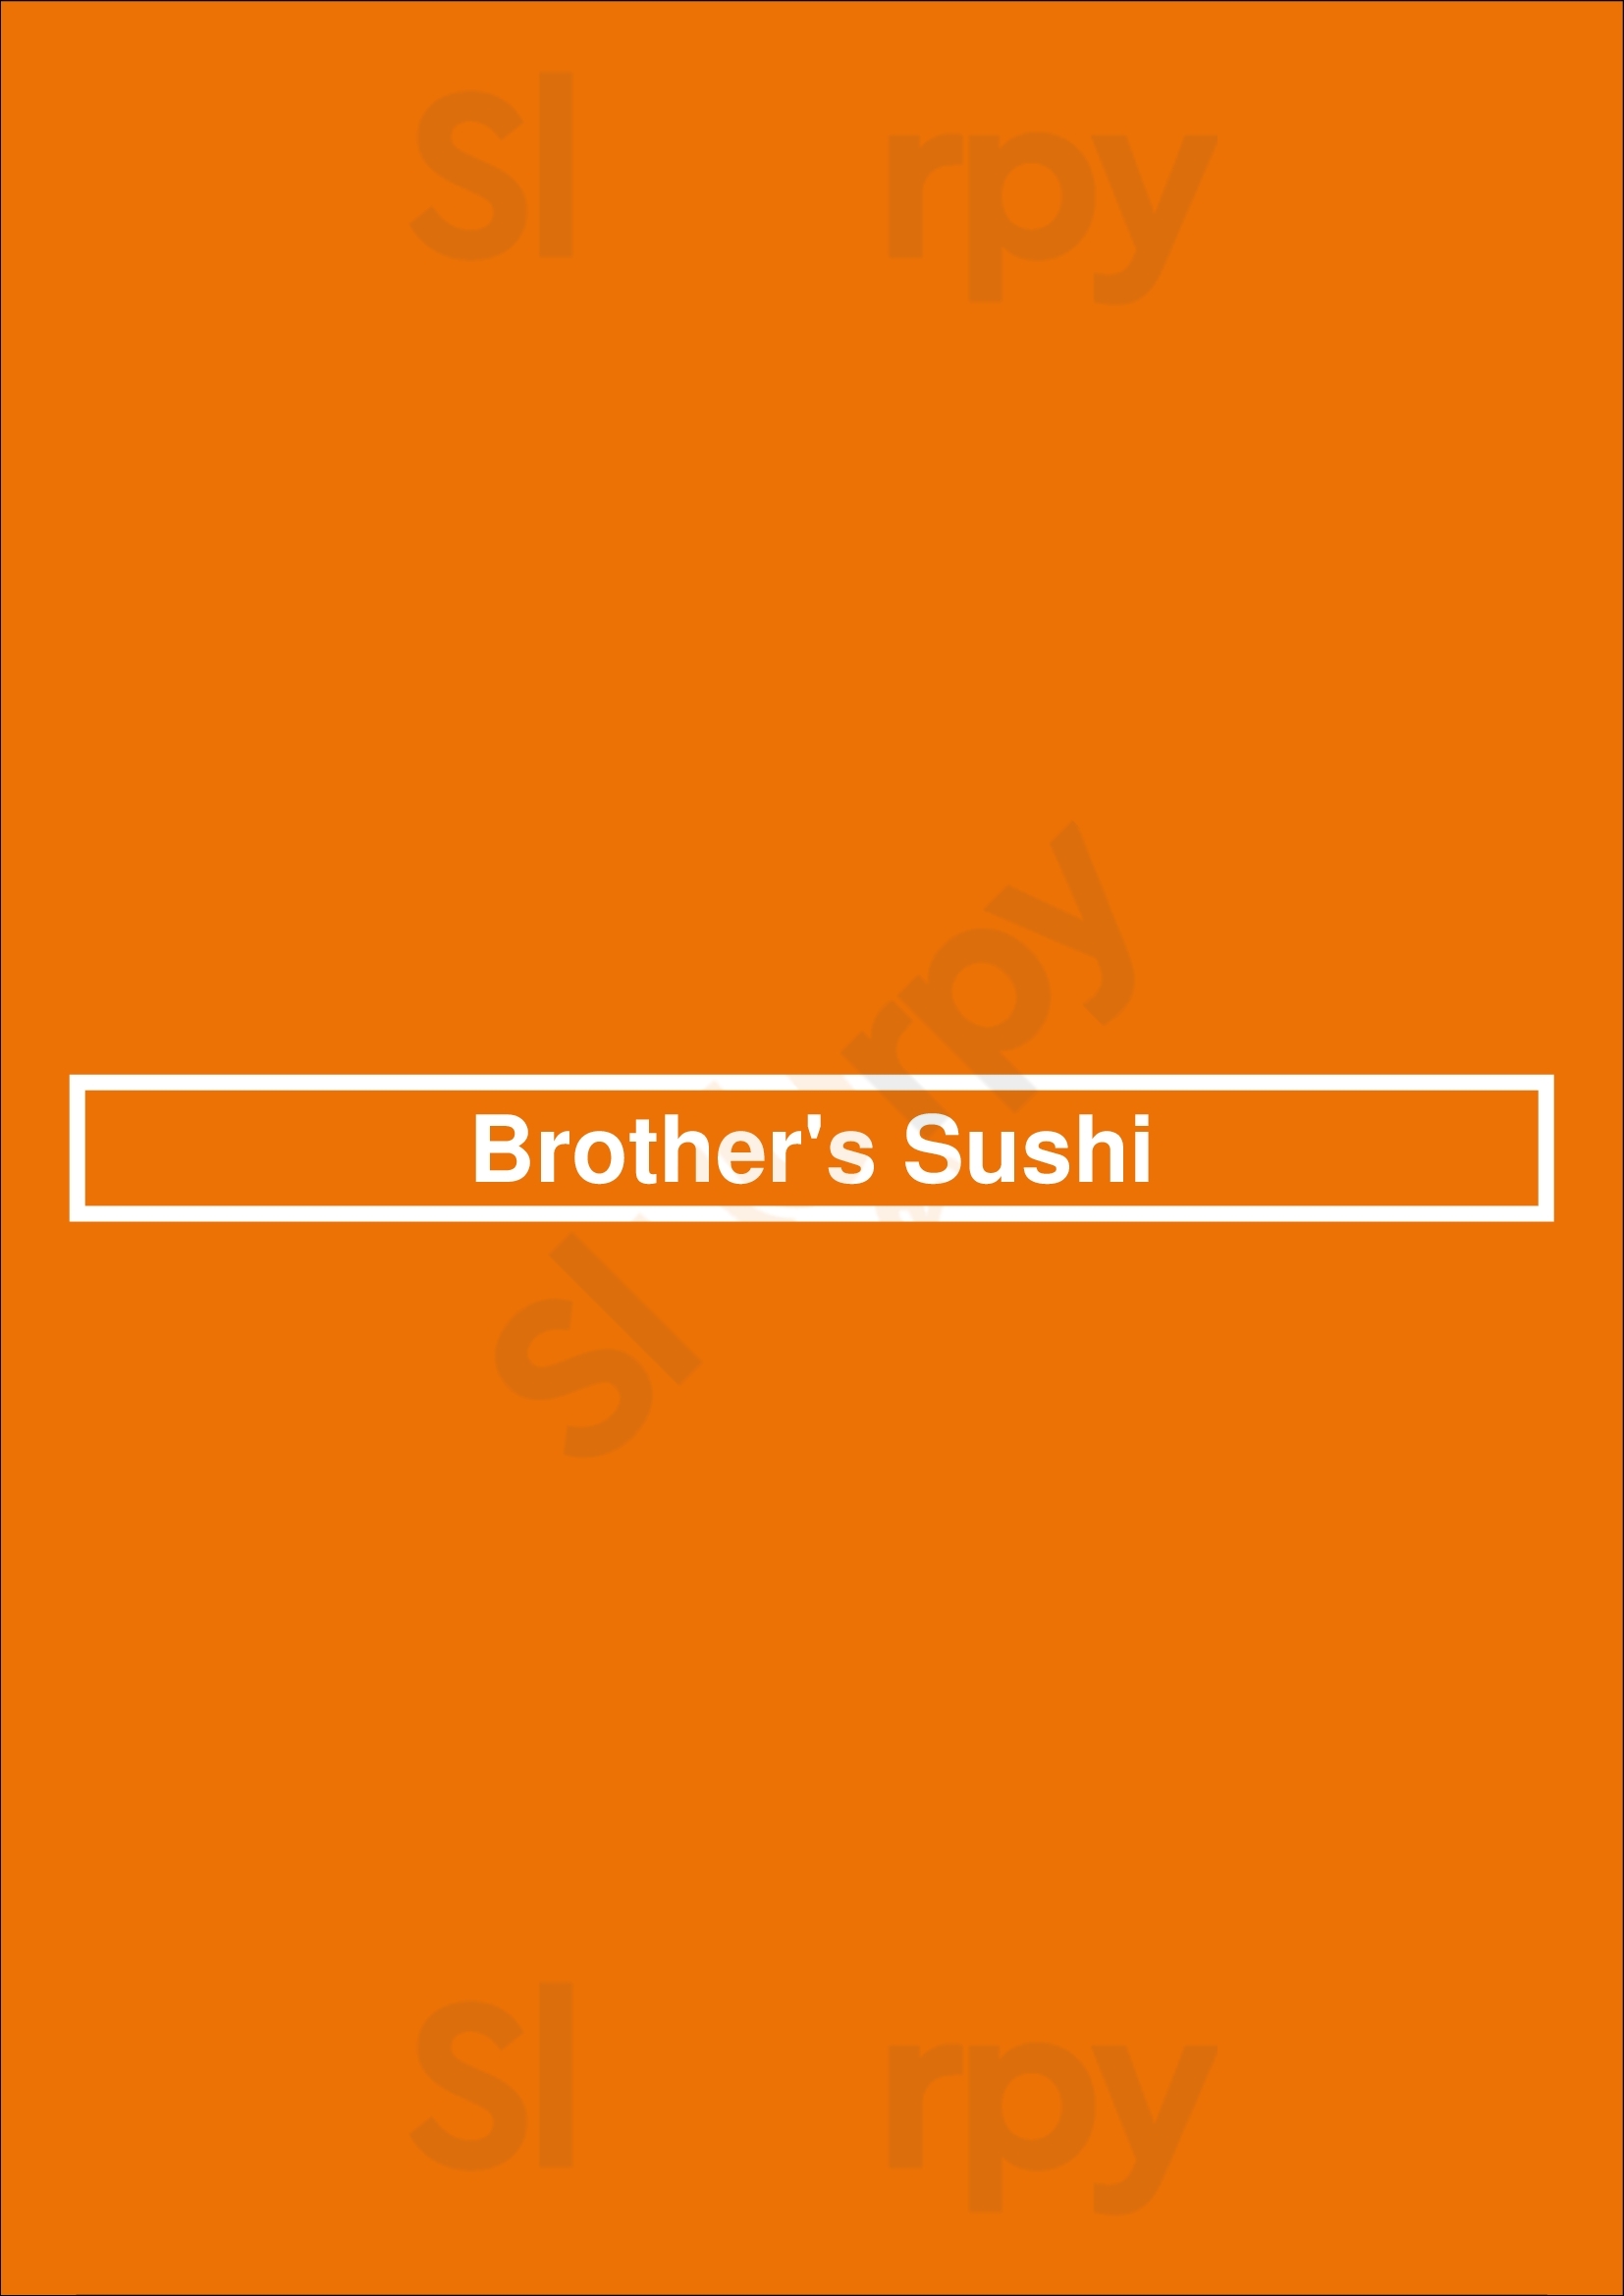 Brother's Sushi Baltimore Menu - 1